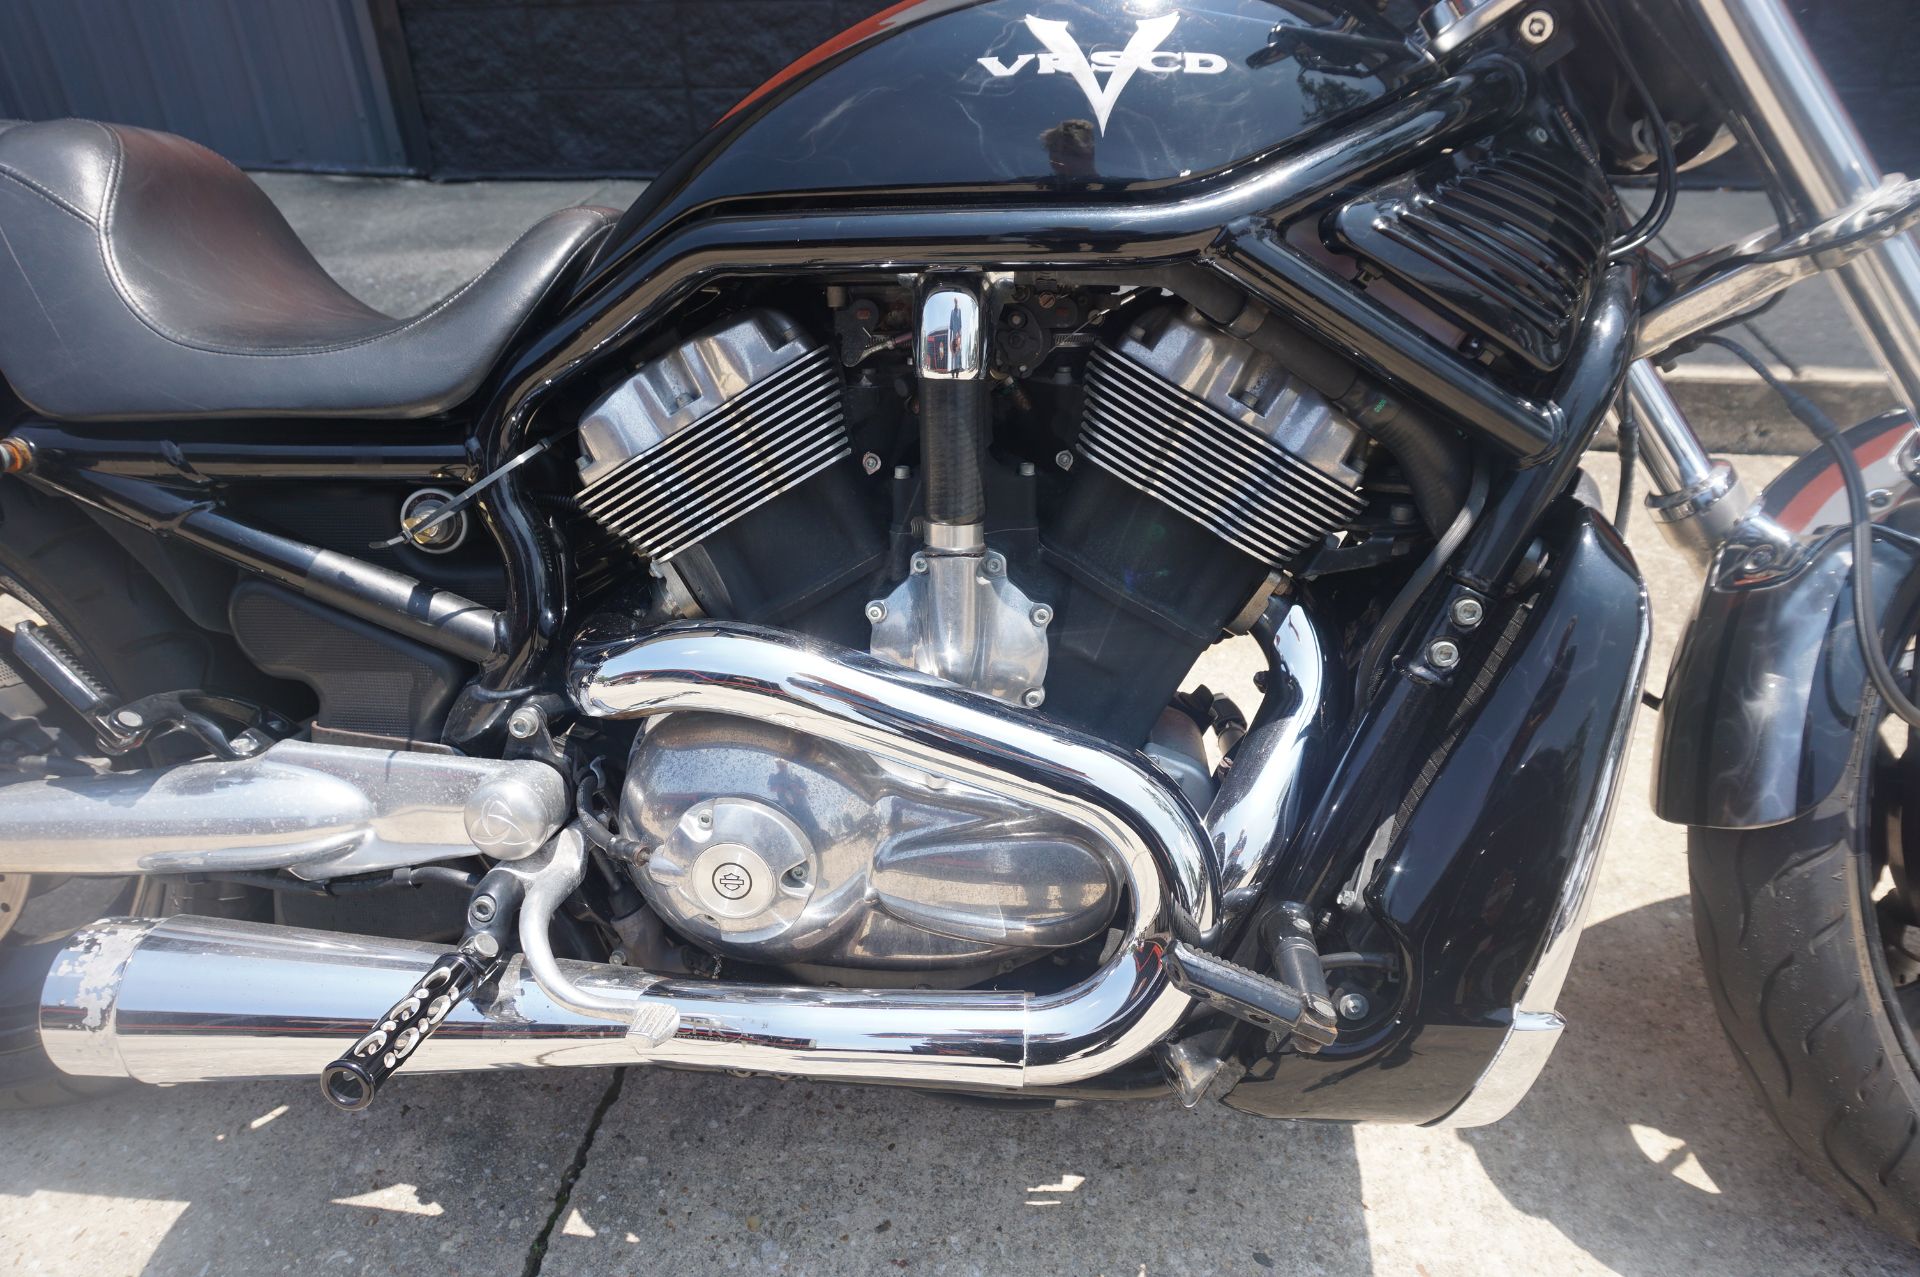 2006 Harley-Davidson V-Rod® in Metairie, Louisiana - Photo 4